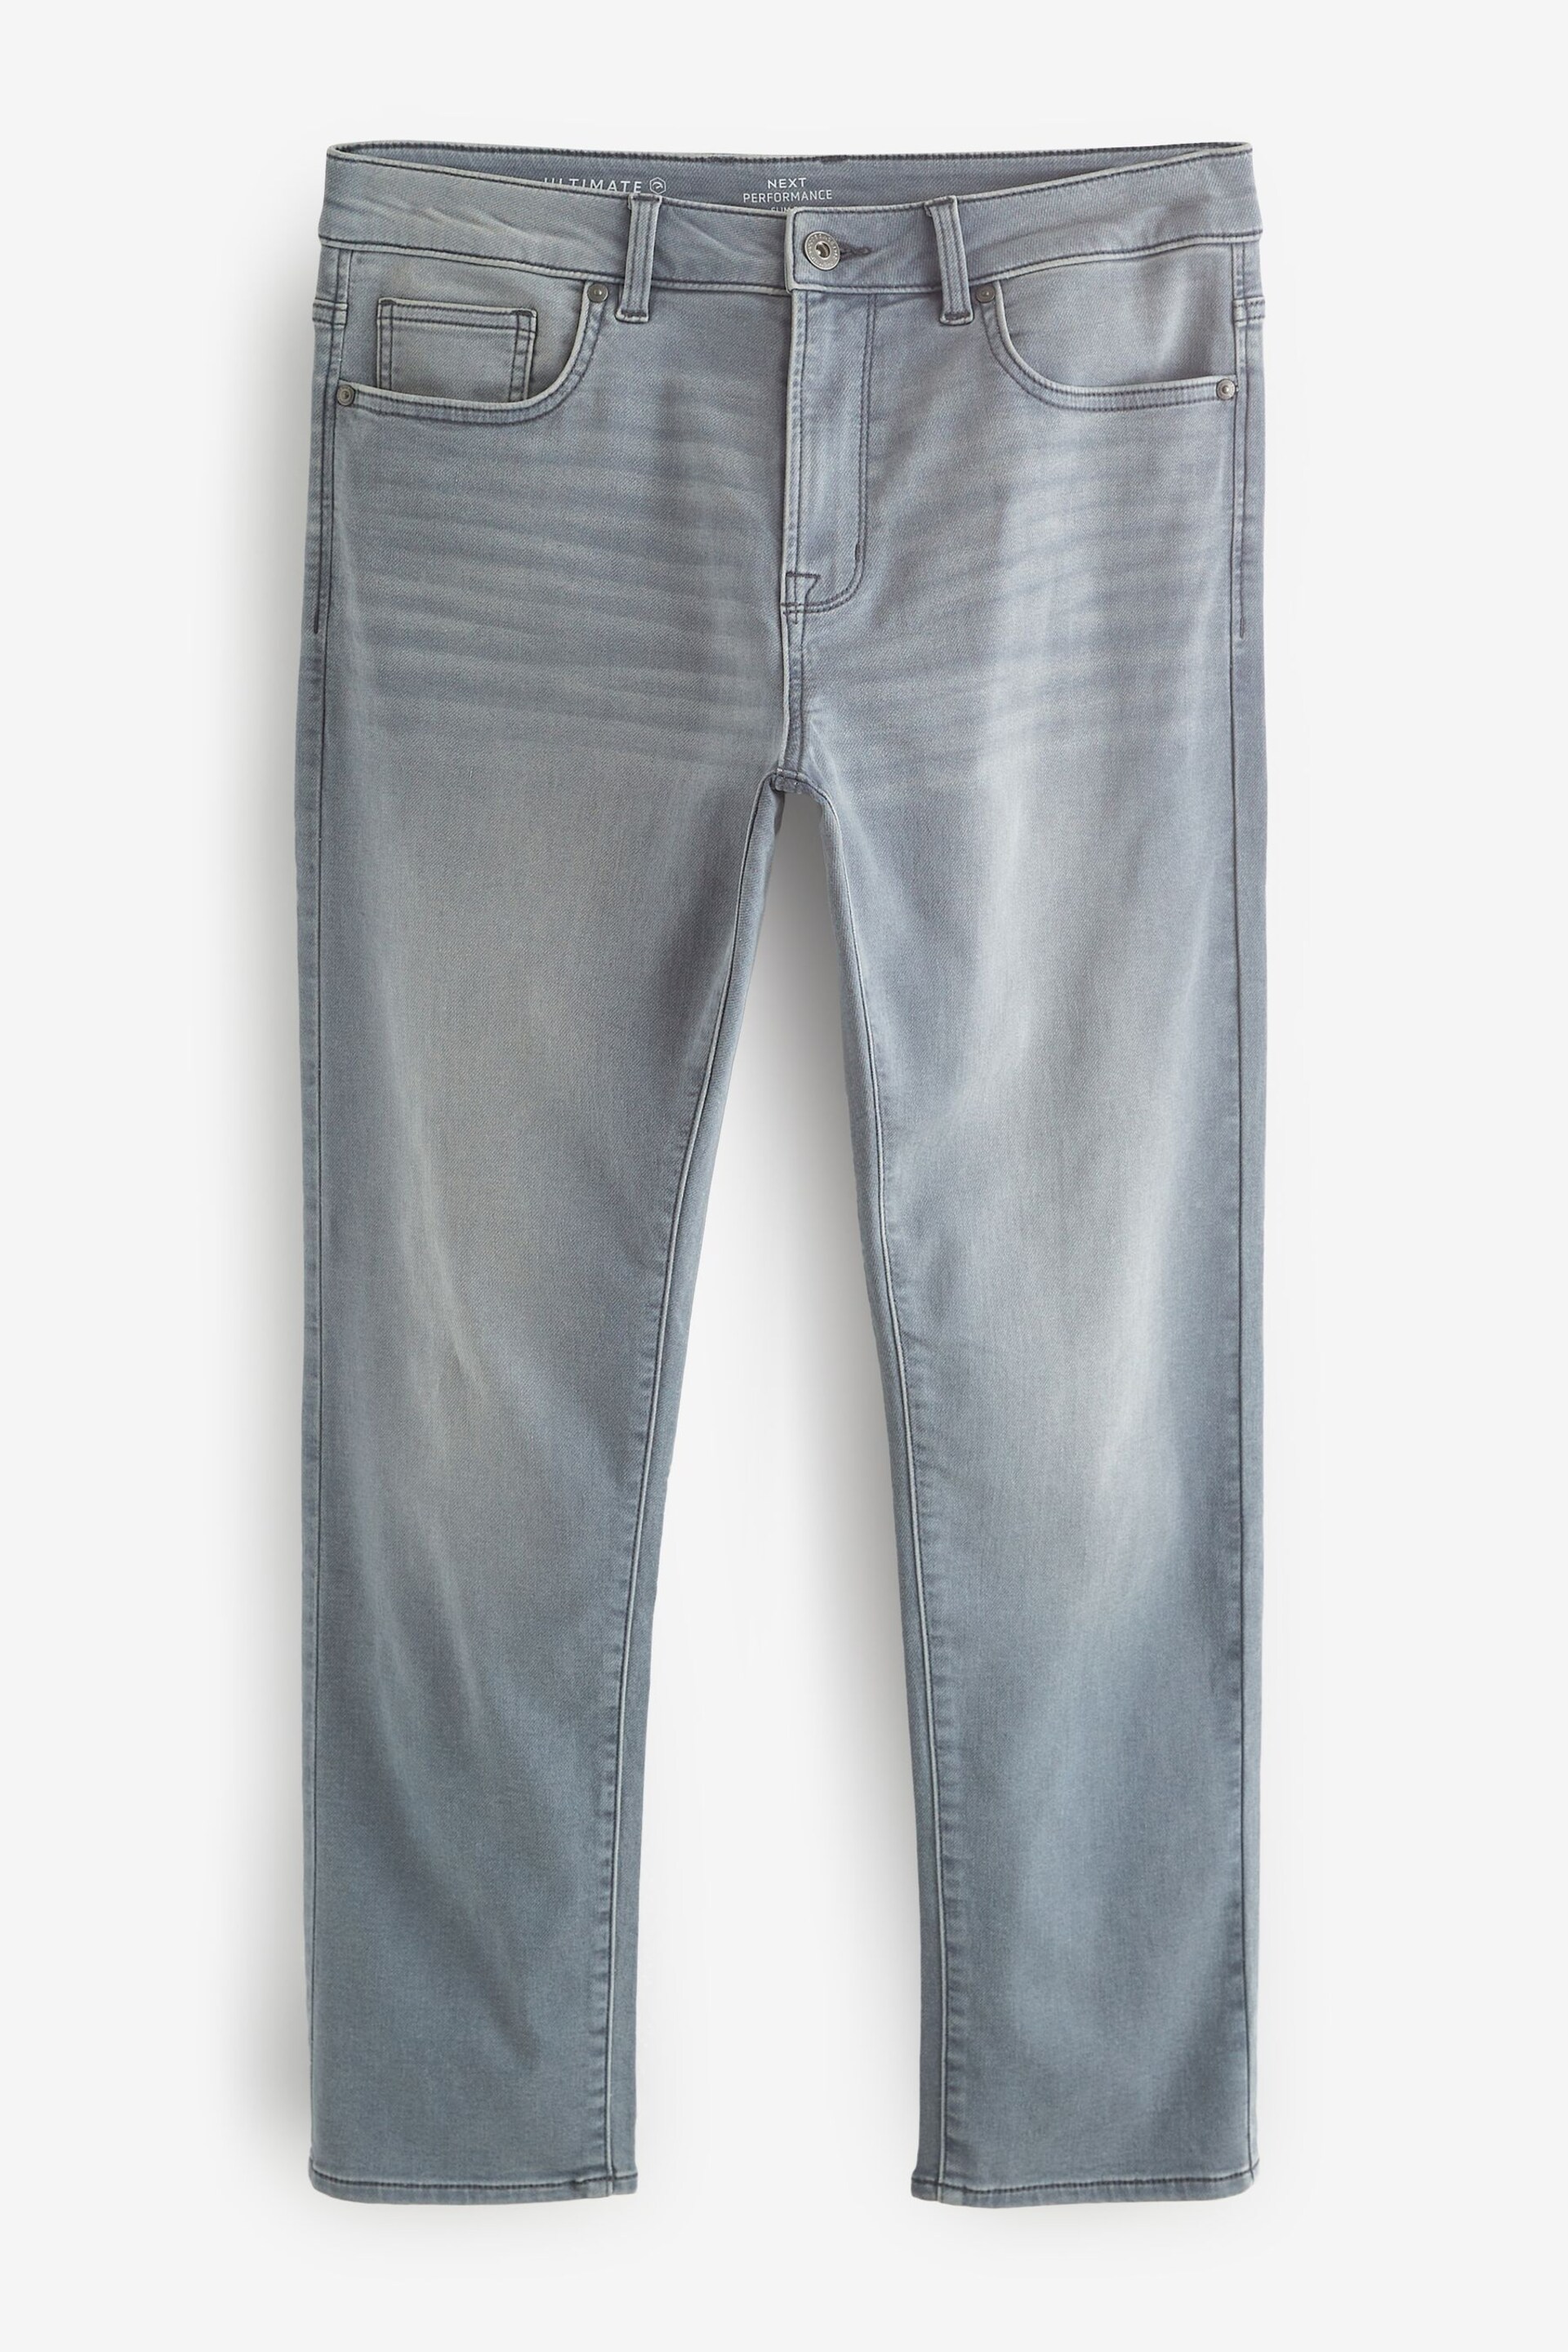 Blue Light Slim Fit Comfort Stretch Jeans - Image 7 of 10